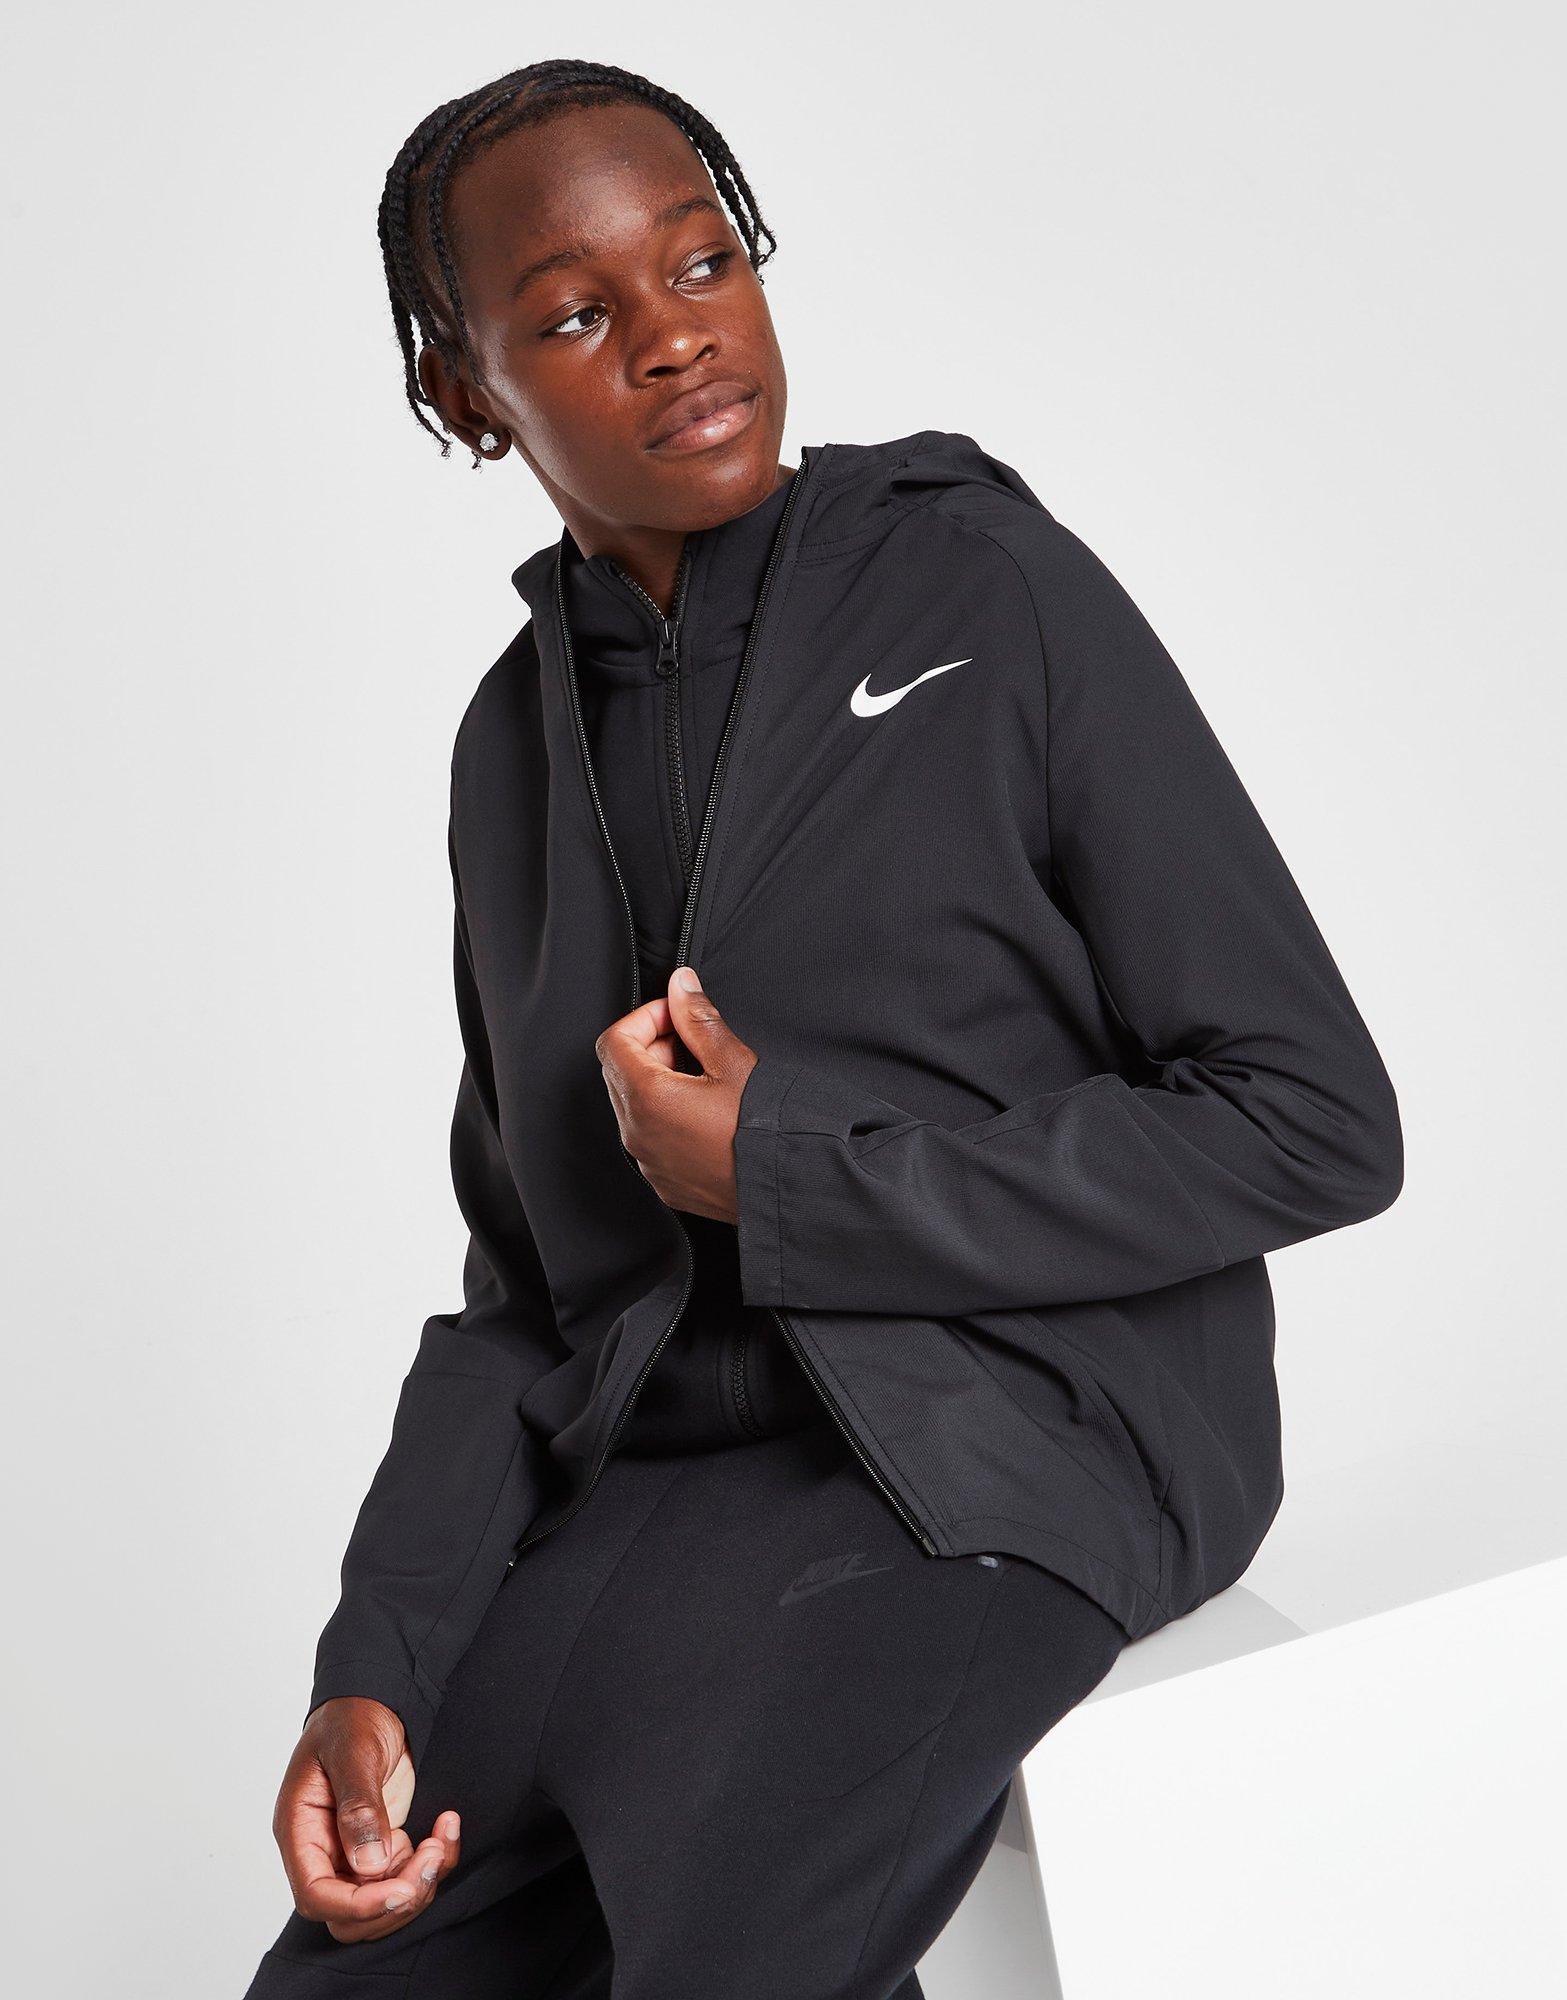 Black Nike Dri-FIT Woven Jacket Junior